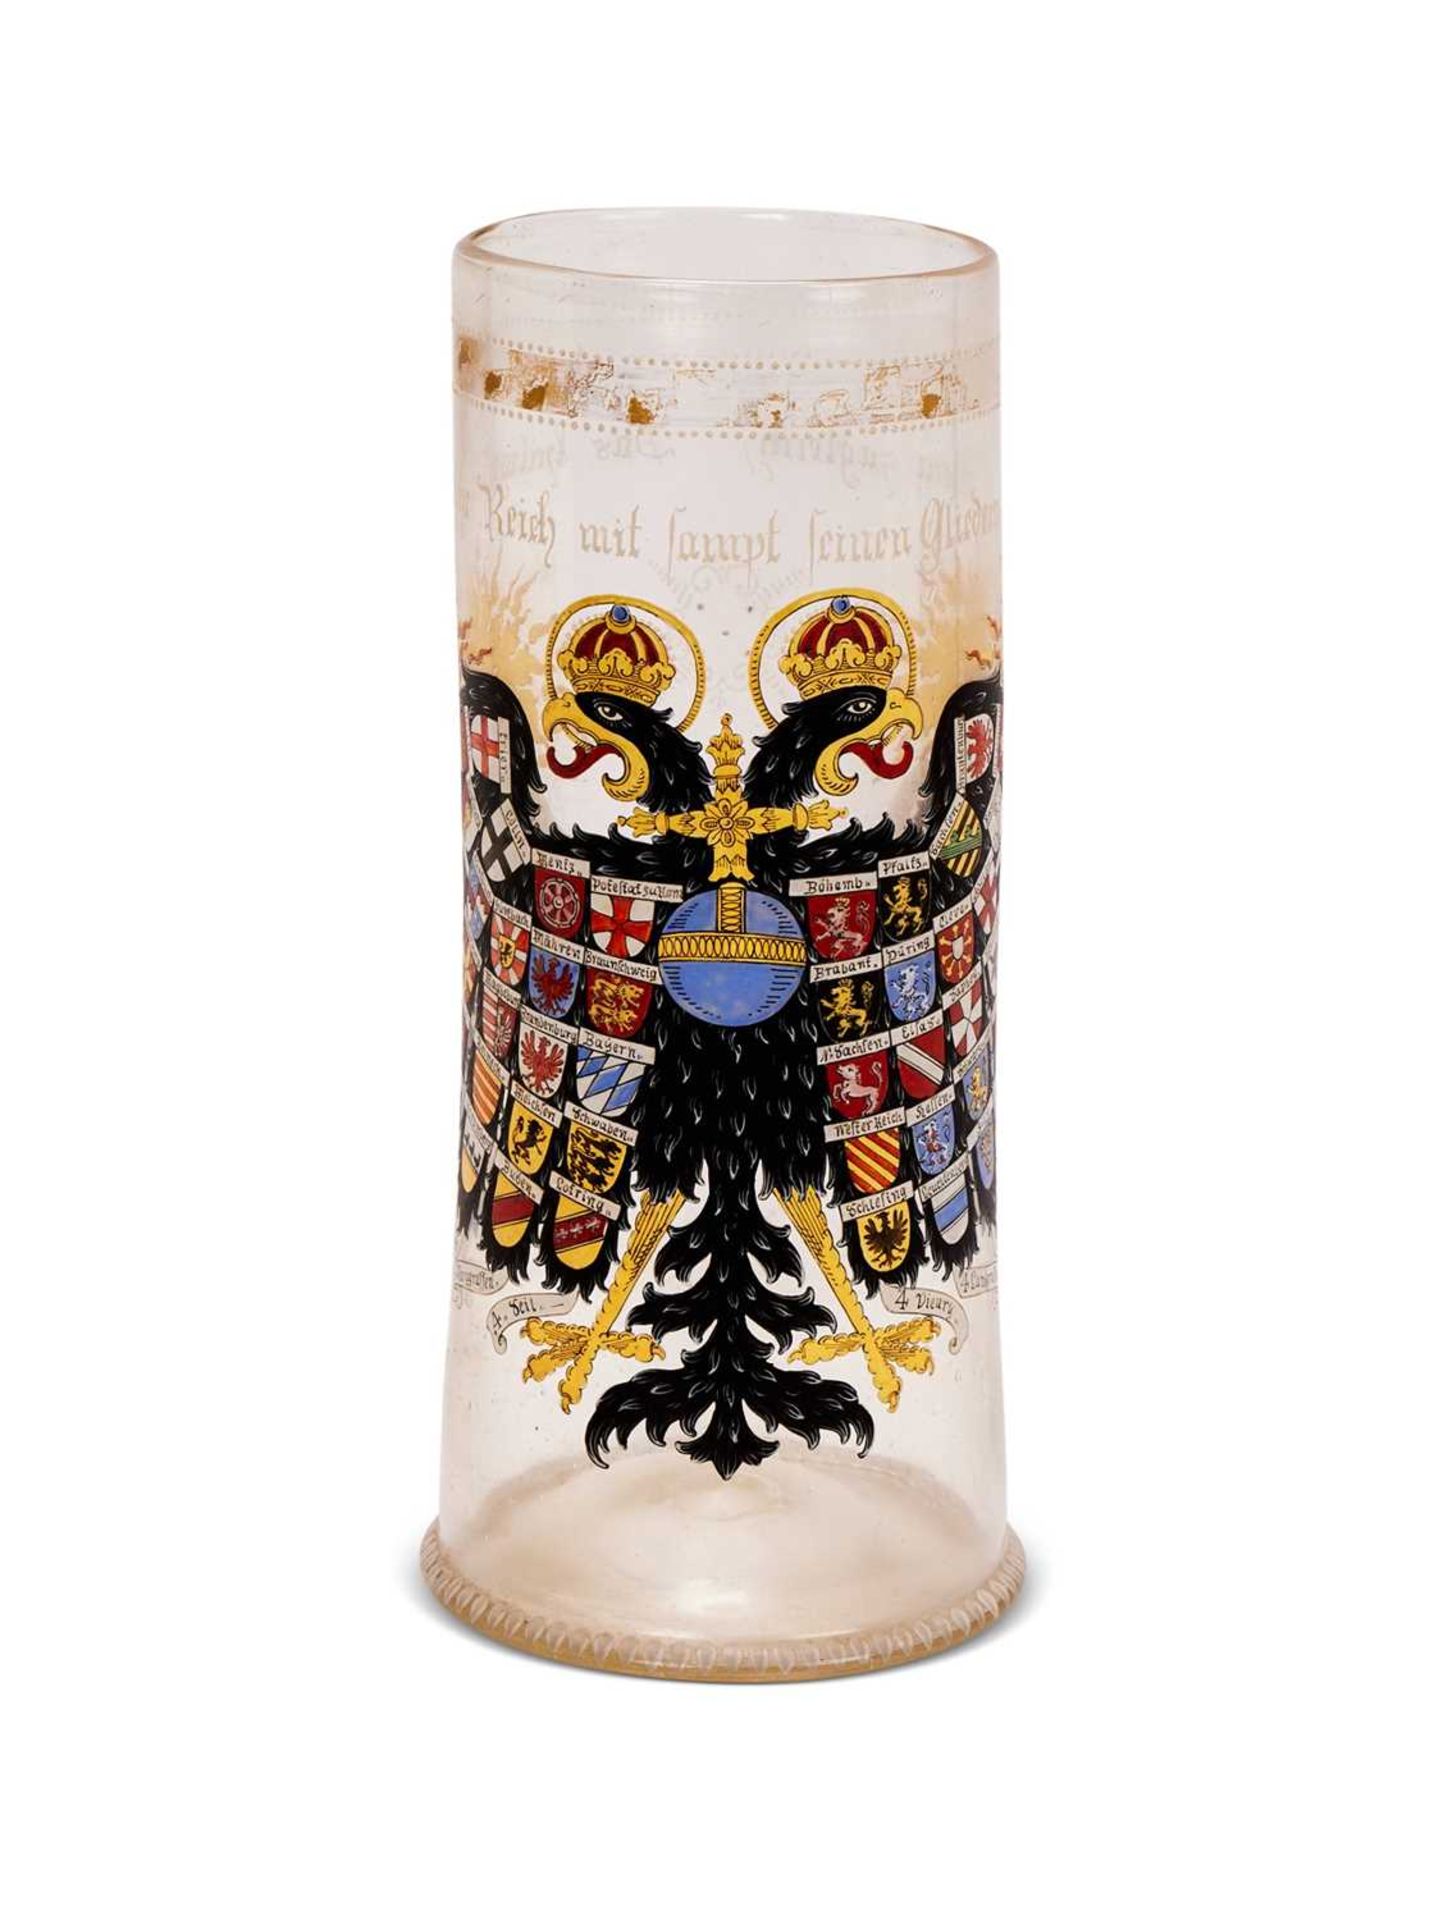 A MASSIVE GERMAN IMPERIAL EAGLE ENAMELLED GLASS BEAKER DATED 1624